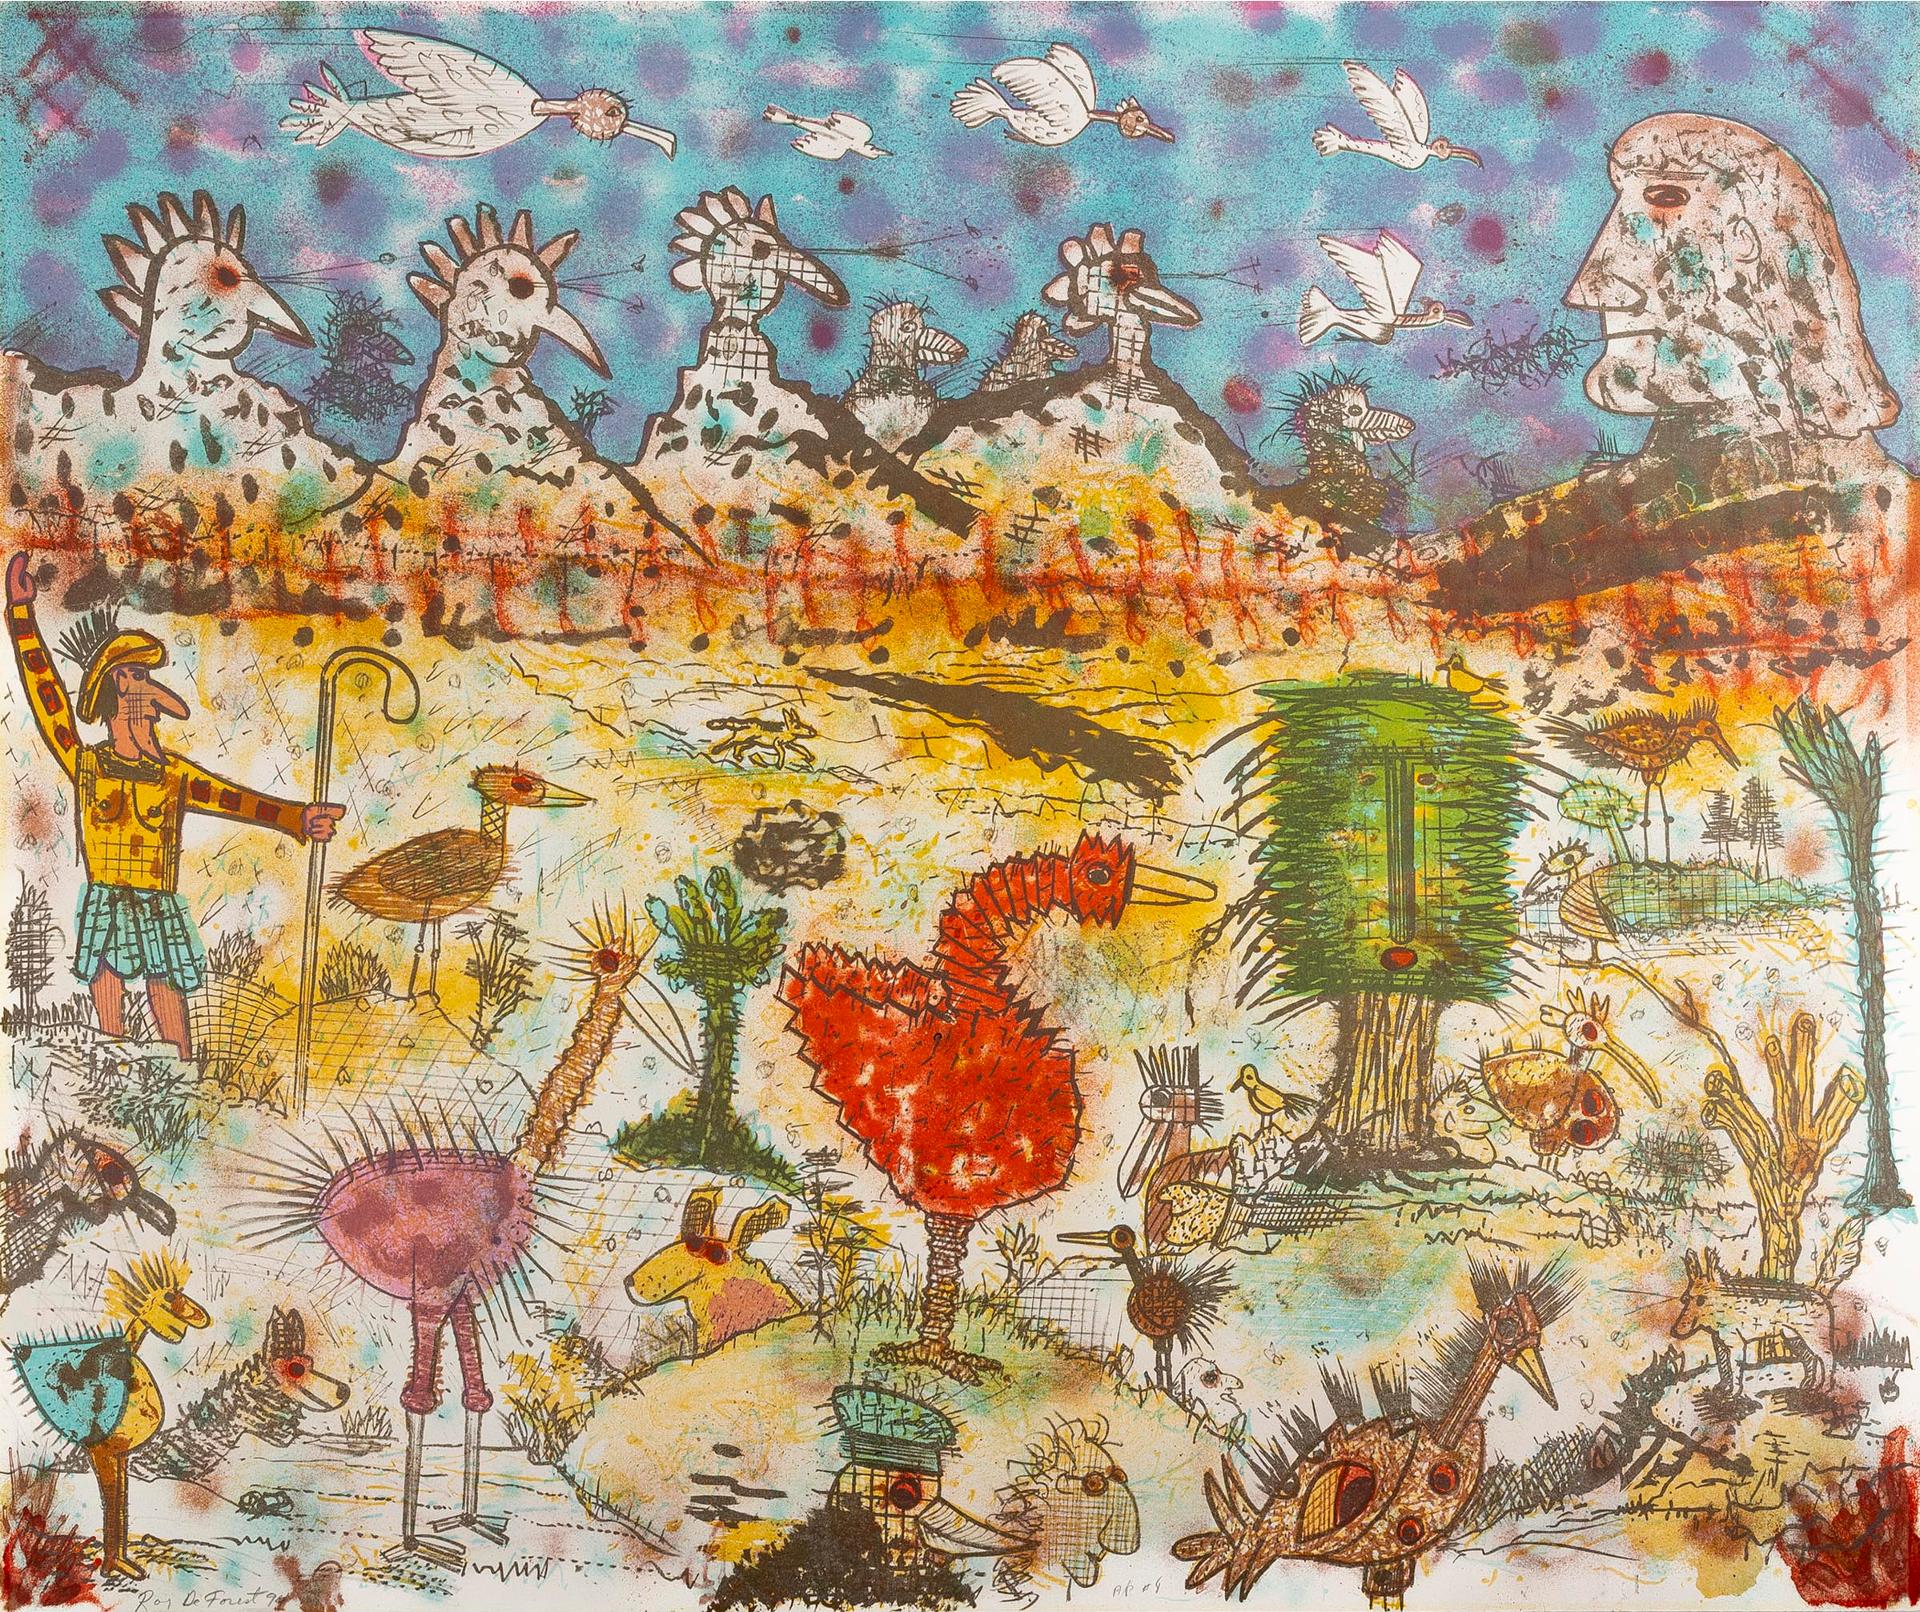 Roy de Forest - Birdland, 1994